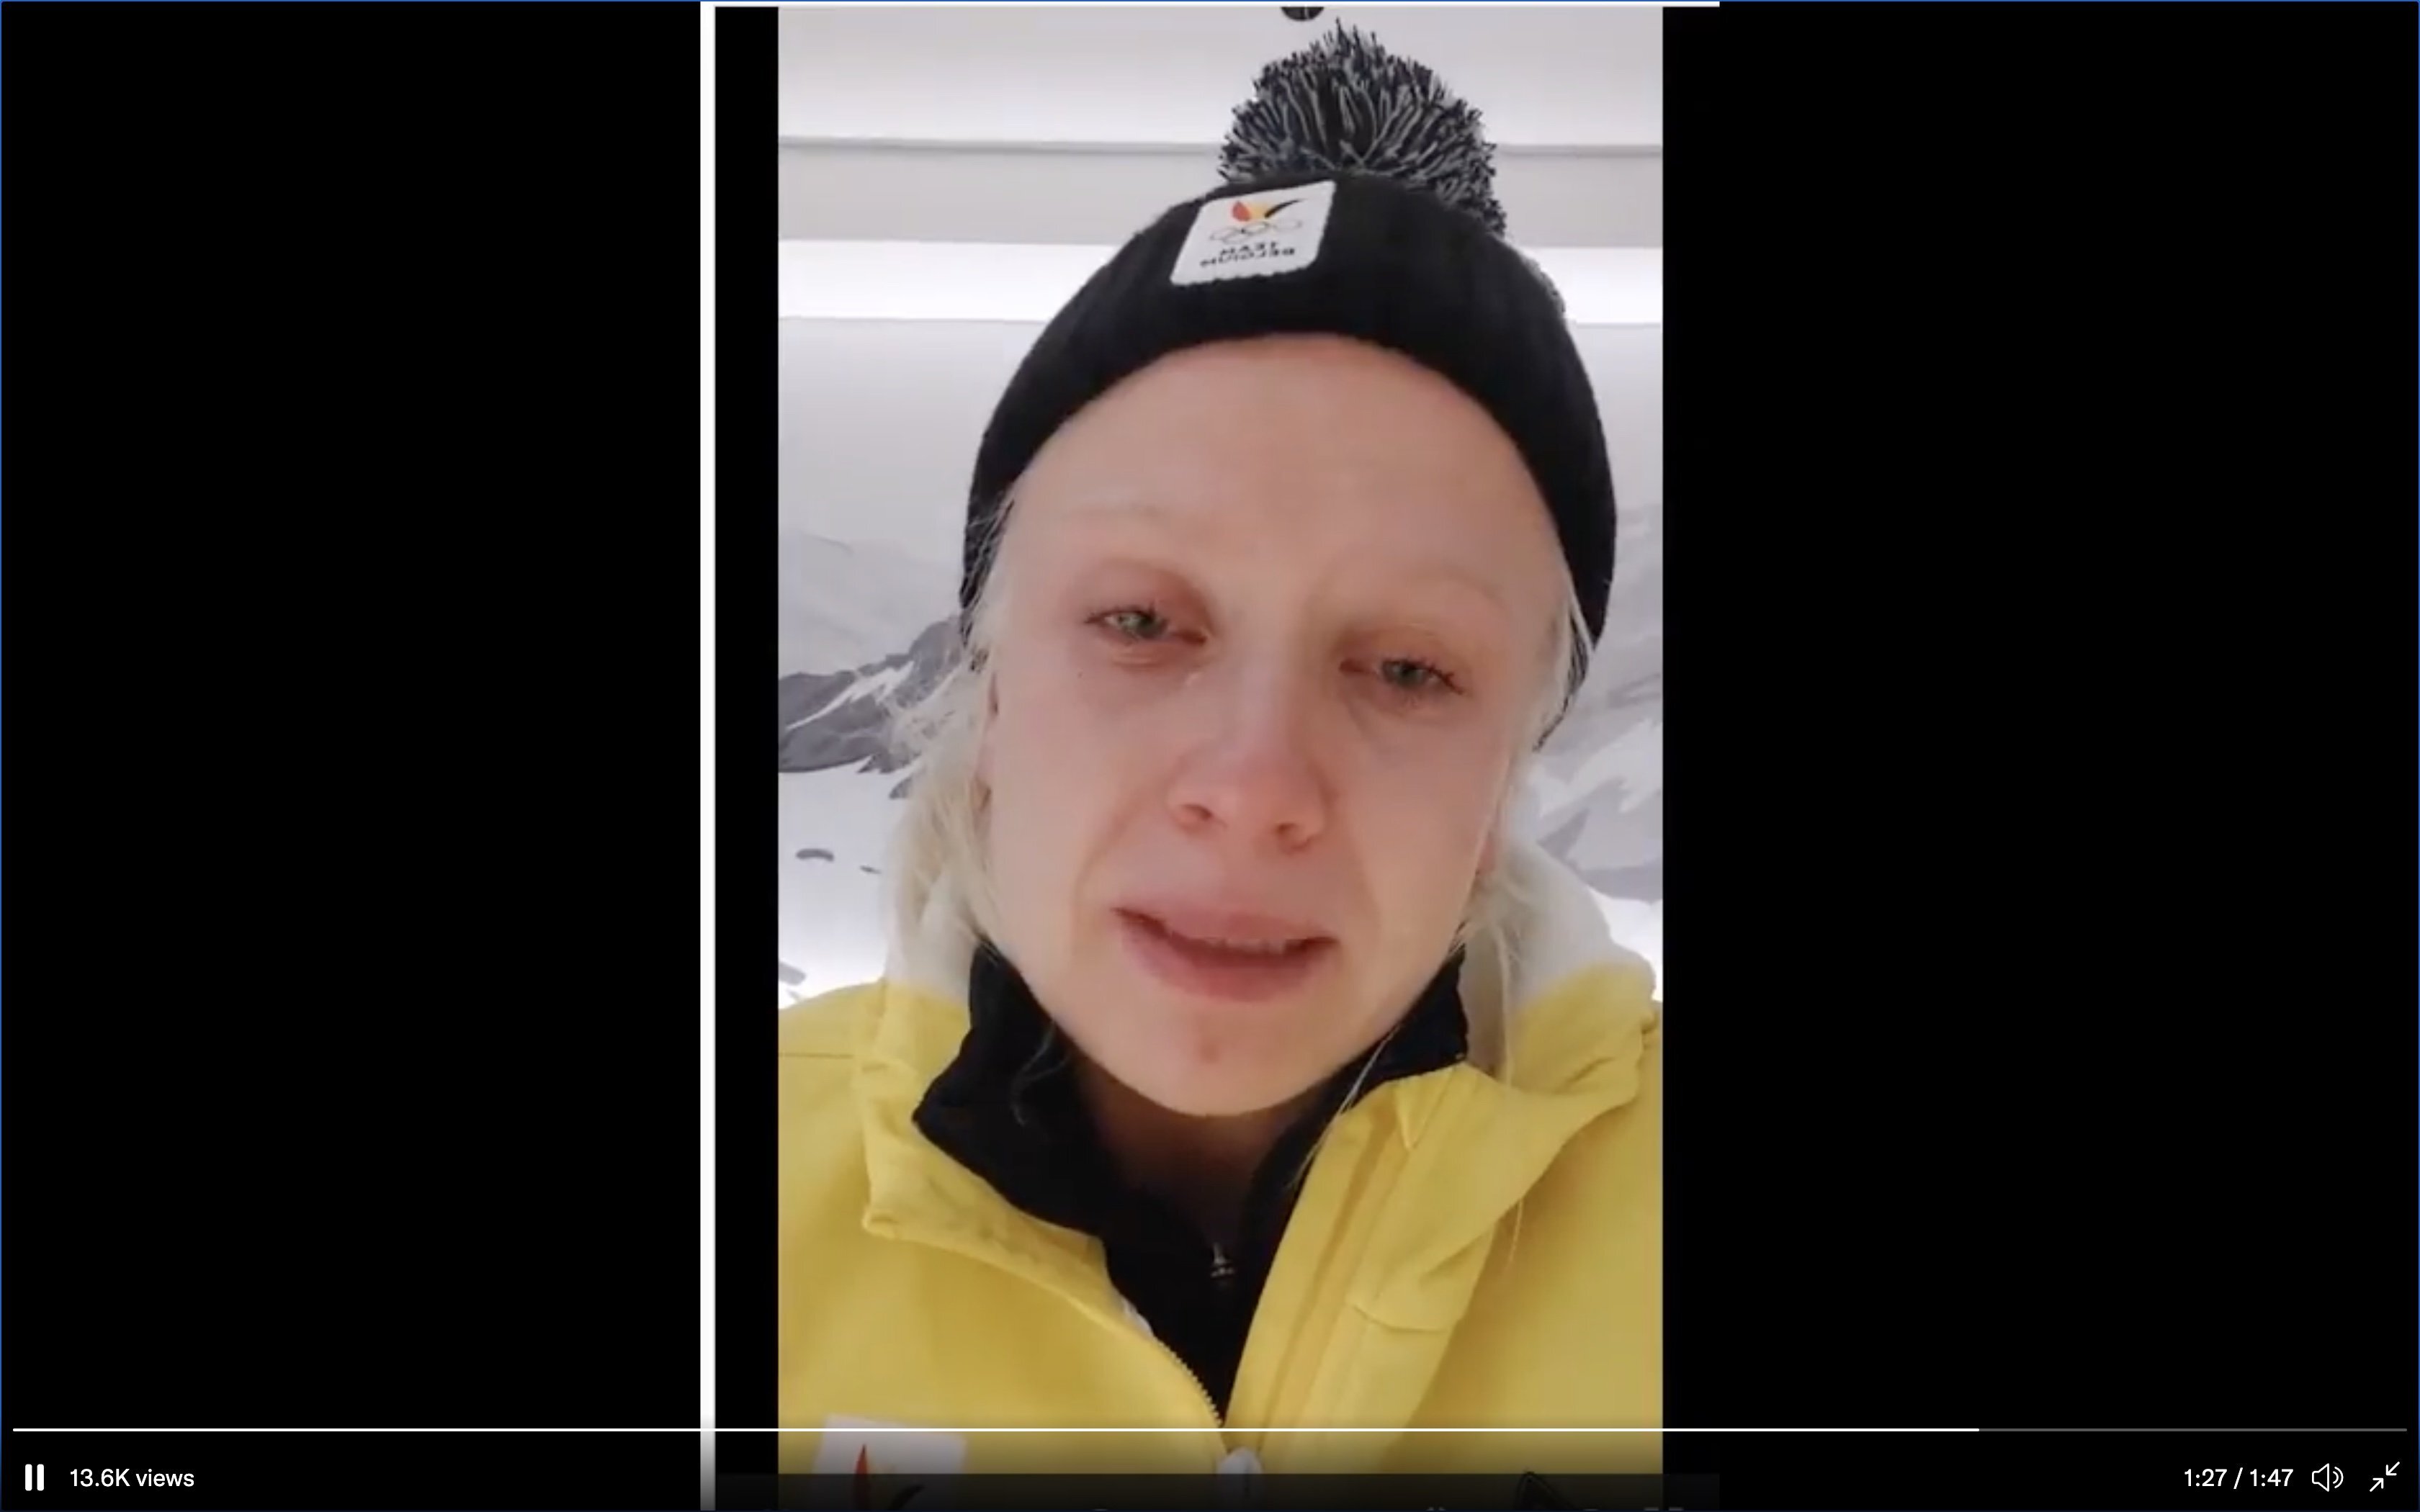 Kim Meylemans cries in a video detailing her ordeal in isolation at Beijing 2022. Photo: Instagram/Kim Meylemans